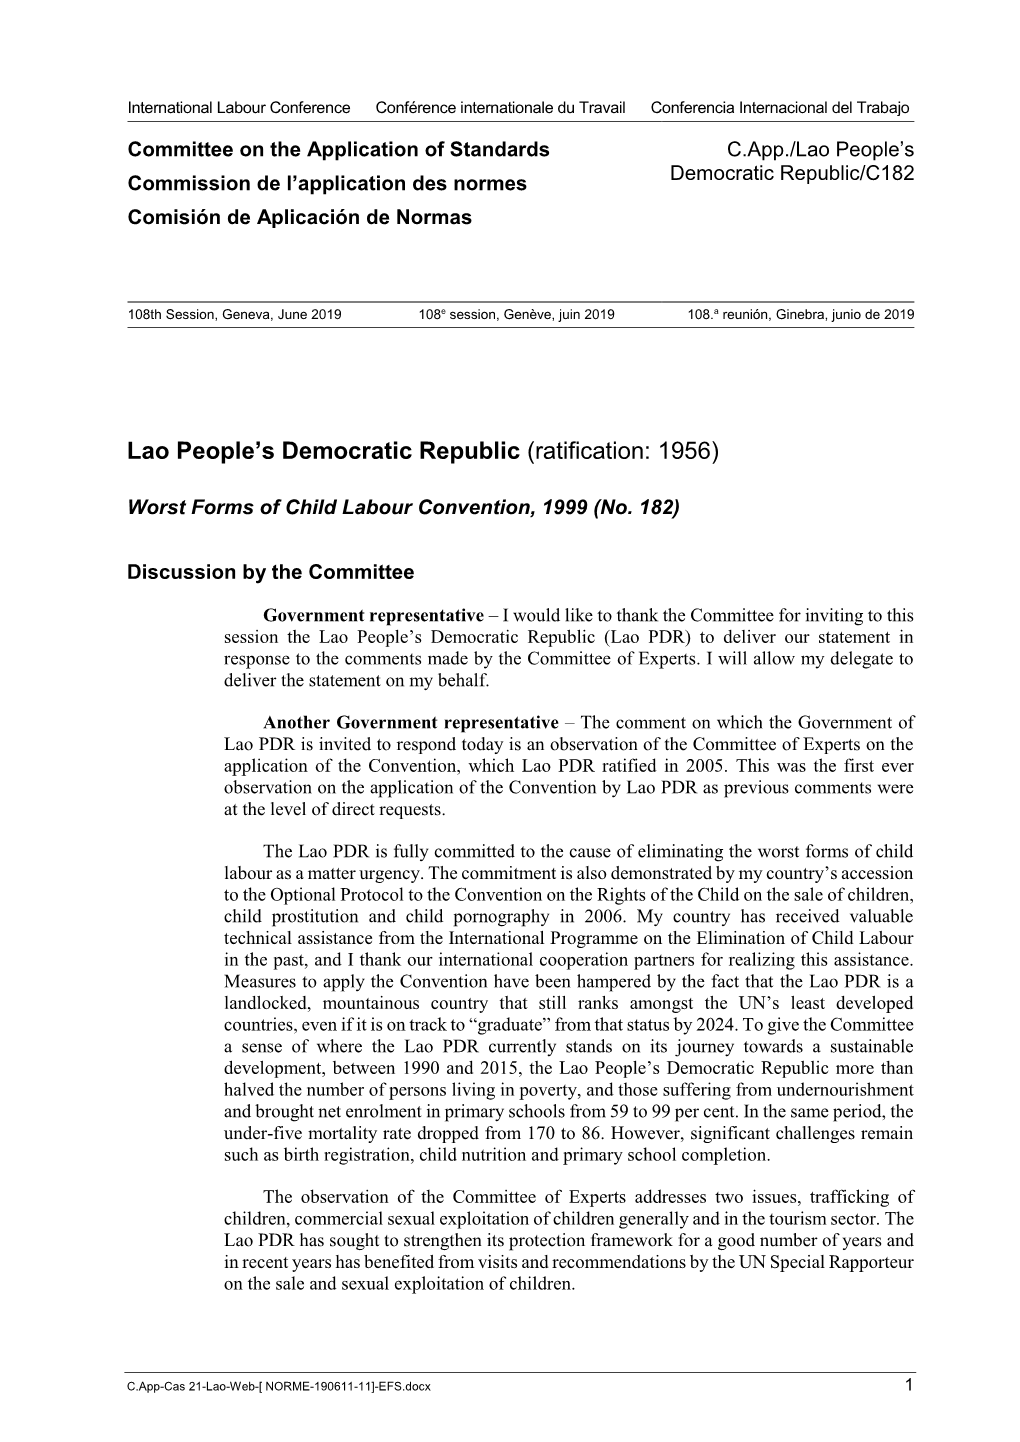 Lao People's Democratic Republic C.182